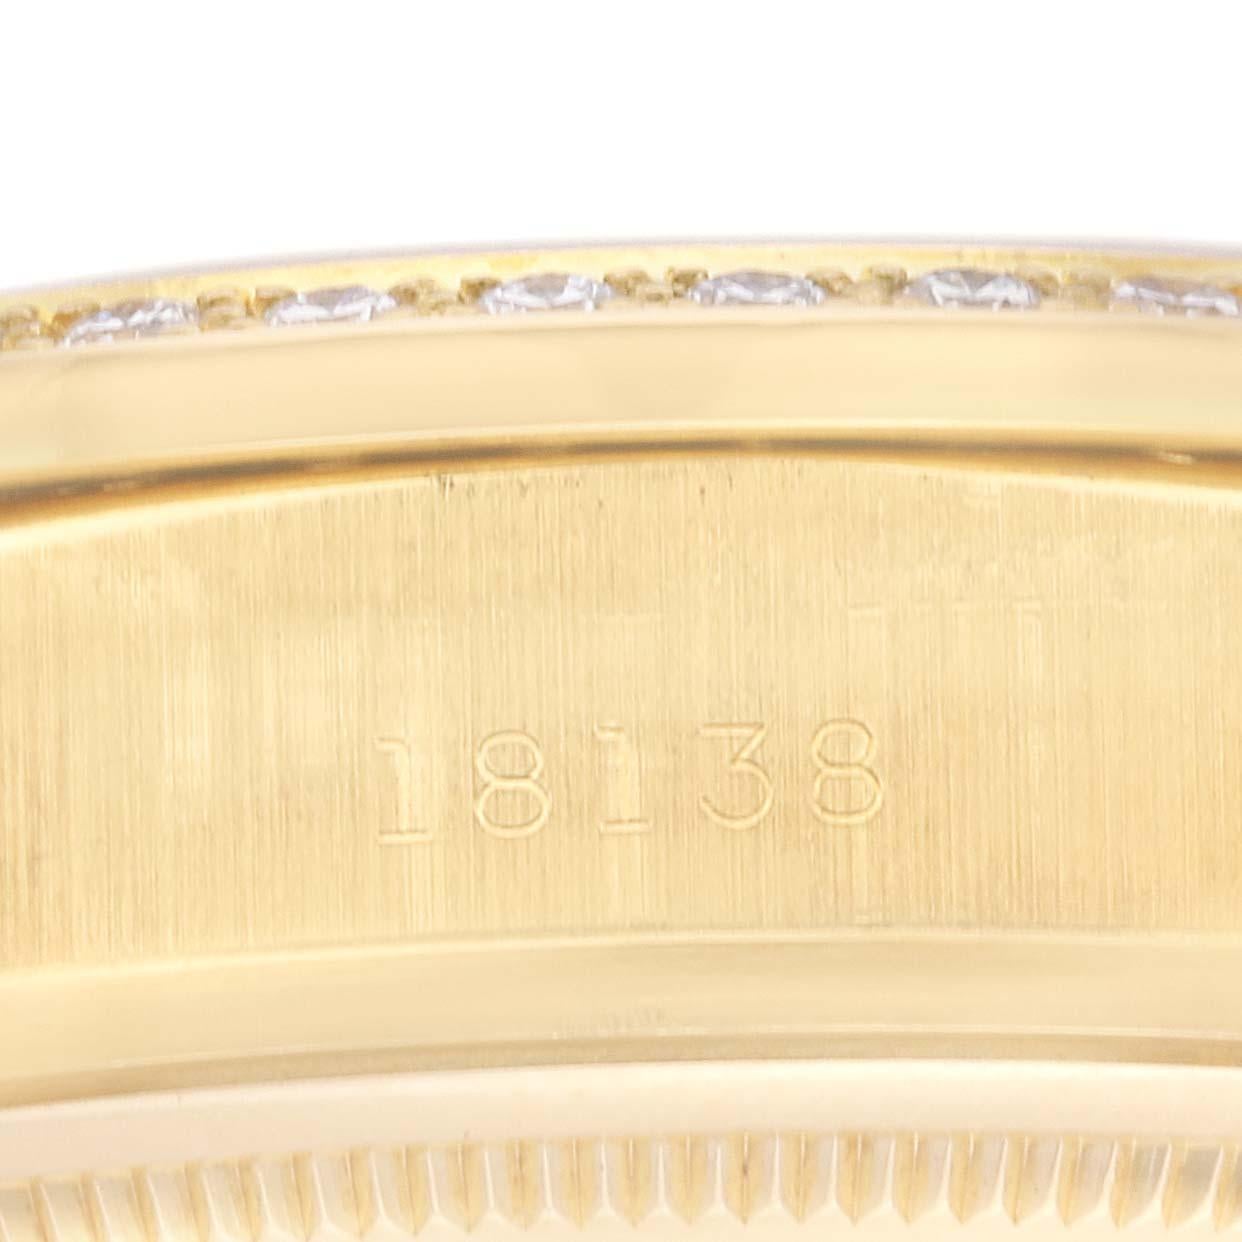 Rolex President Day-Date Yellow Gold Diamond Mens Watch 18138. Officially certified chronometer self-winding movement. 18k yellow gold oyster case 36.0 mm in diameter.  Rolex logo on a crown. Original Rolex factory diamond lugs. Original Rolex